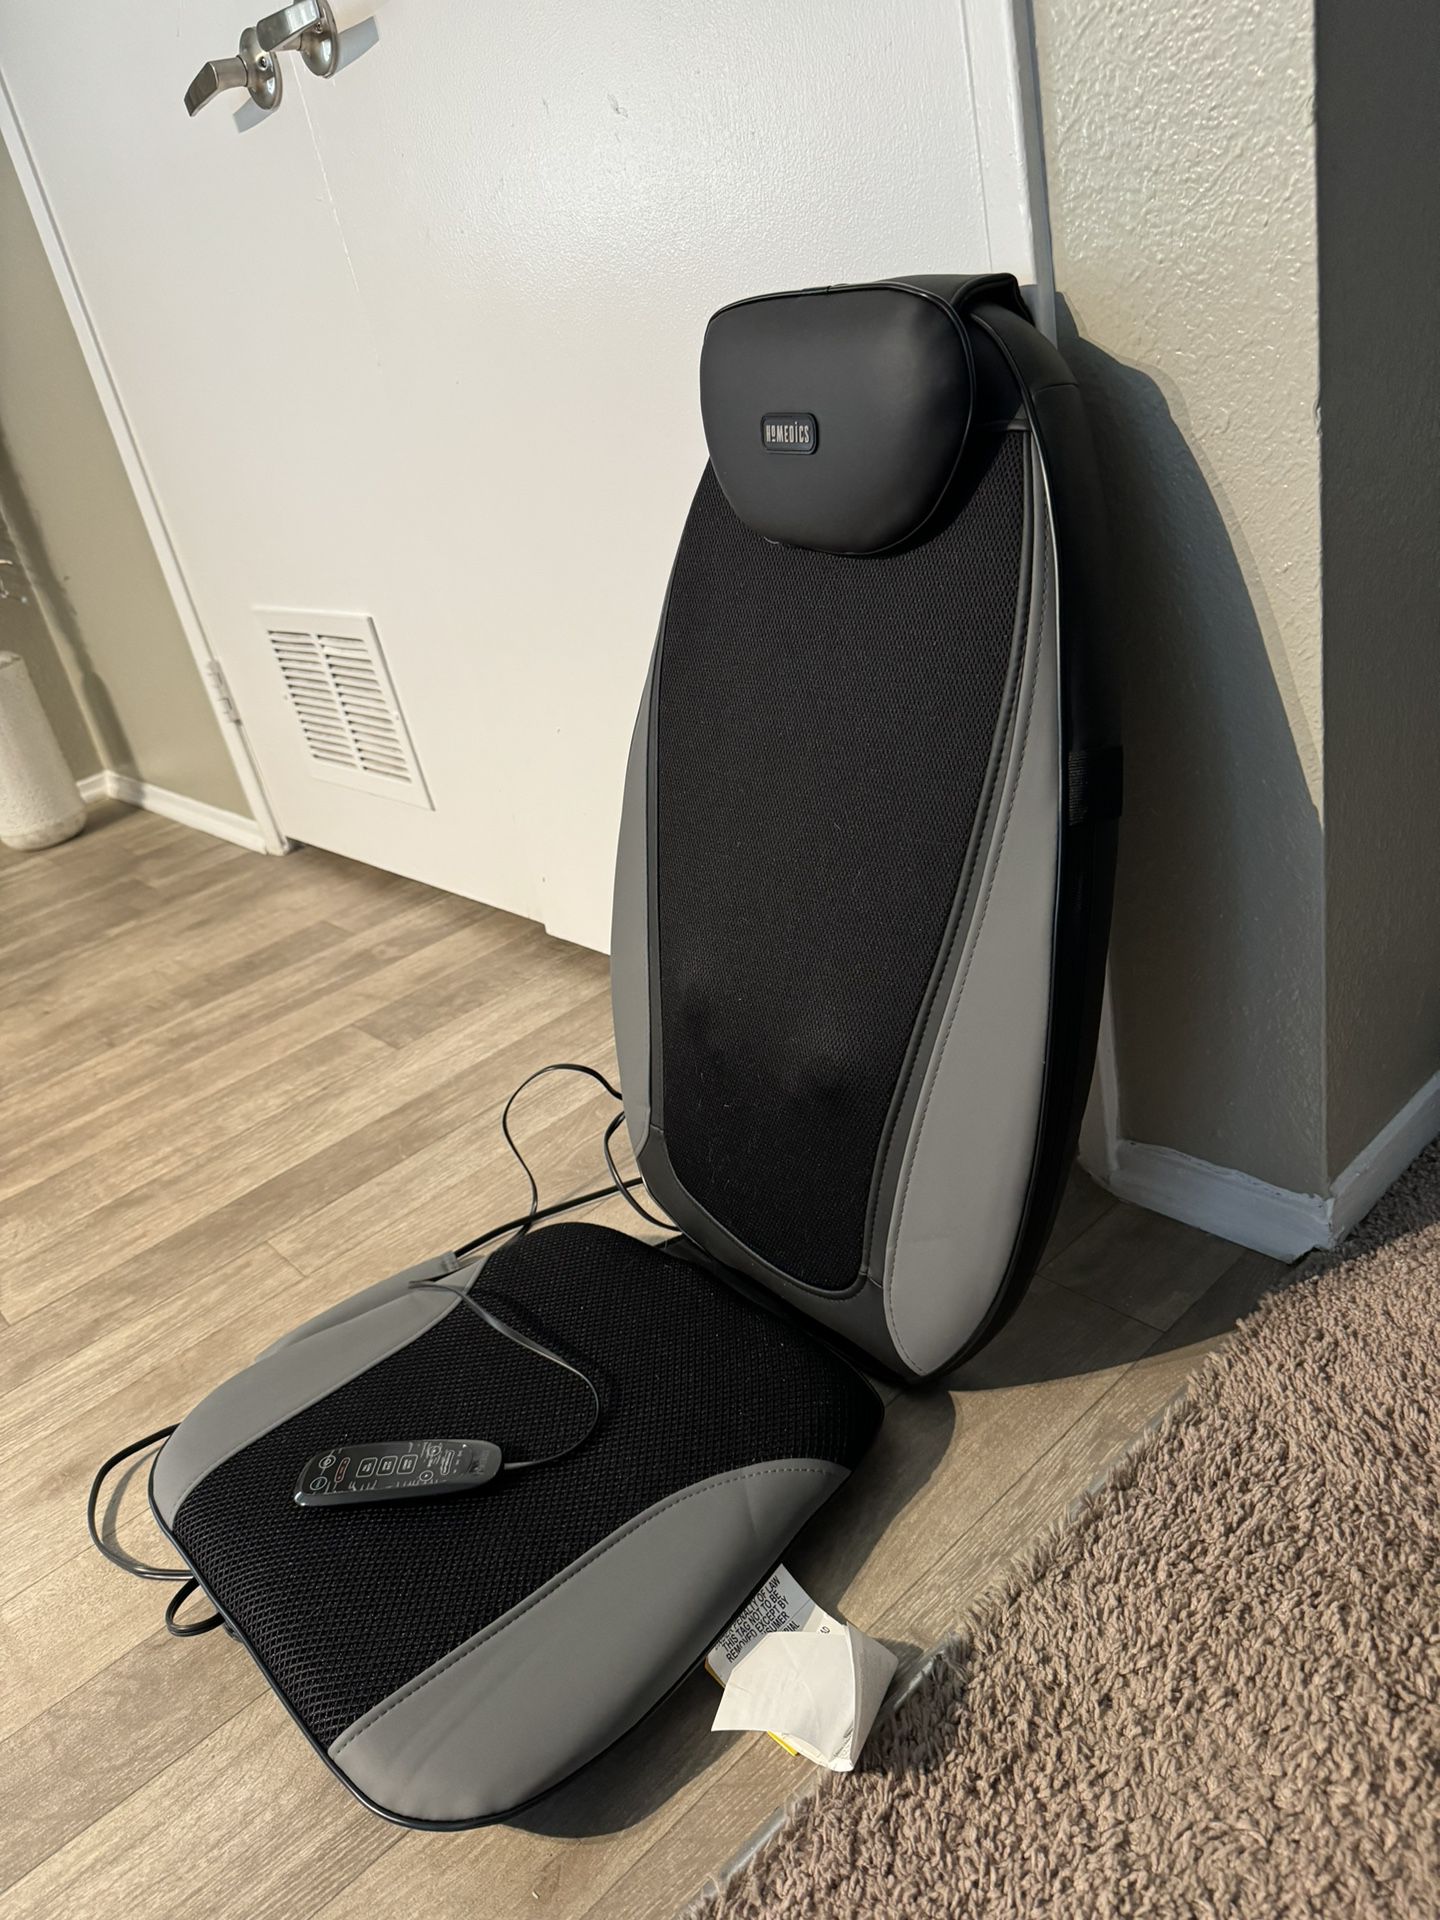 HoMEDICS Shiatsu Massage Vibrate Chair Cushion w/ Heat & Remote